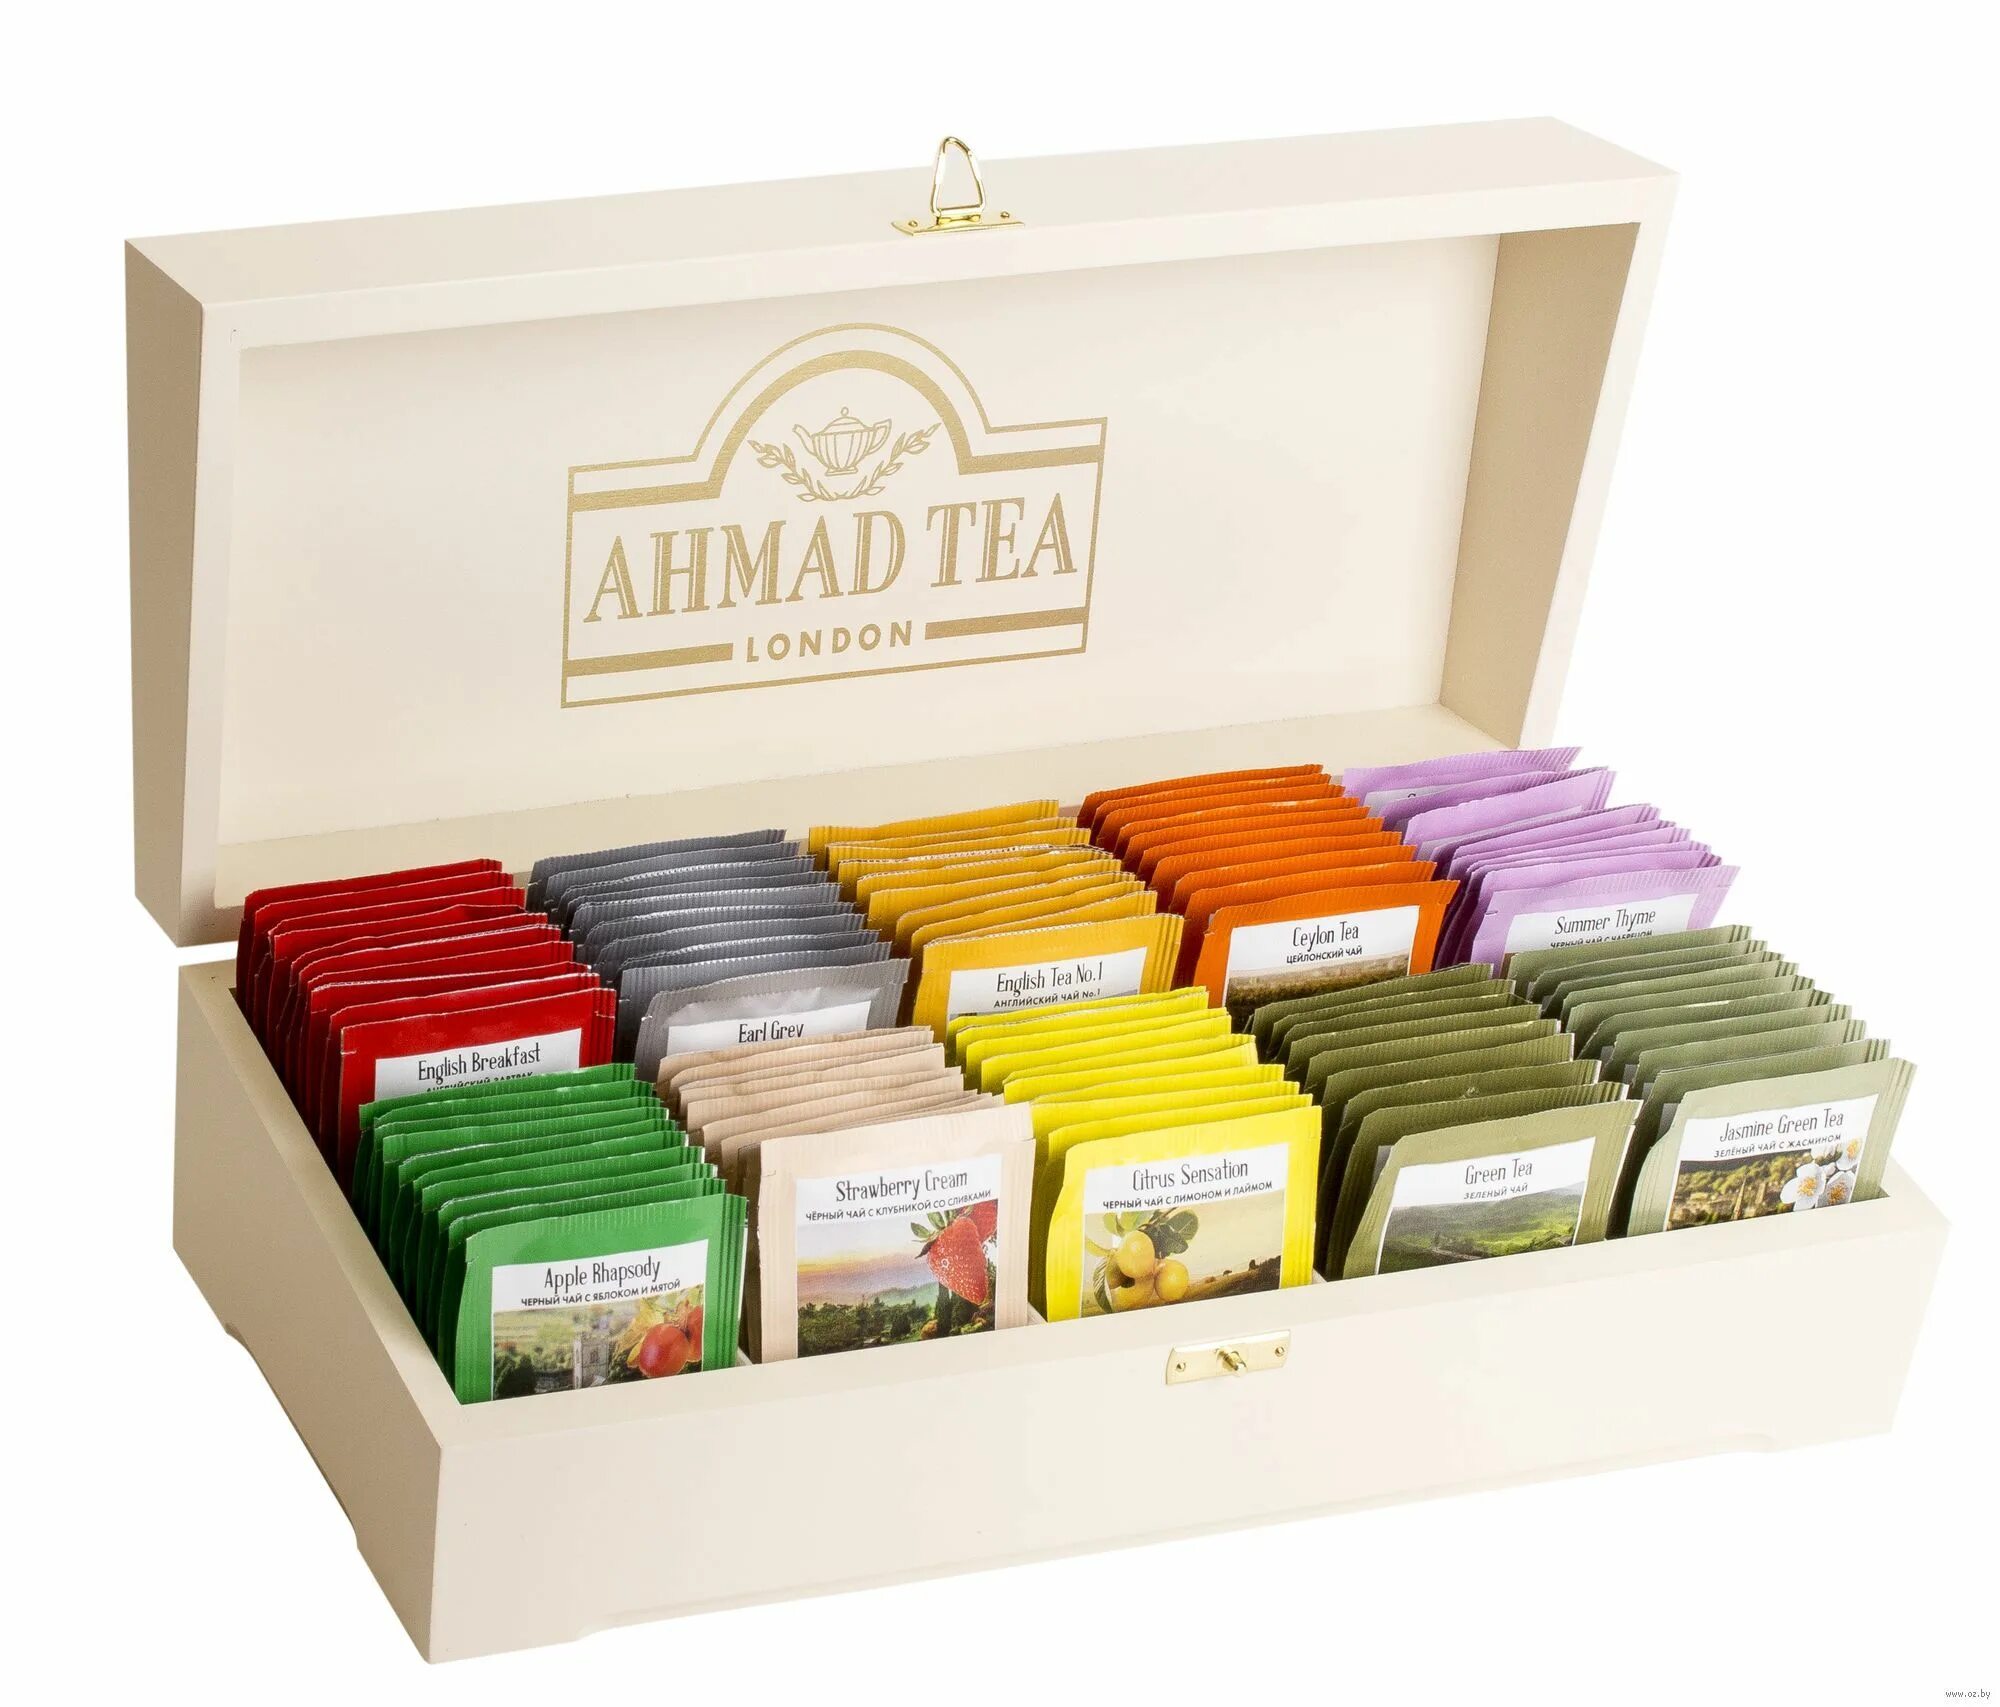 Ахмад чайное ассорти 100 пакетиков. Ахмад Теа набор чая. Чай Ахмад в пакетиках ассорти. Чай Ахмад ассорти 100 пакетиков. Купить чай набор в пакетиках